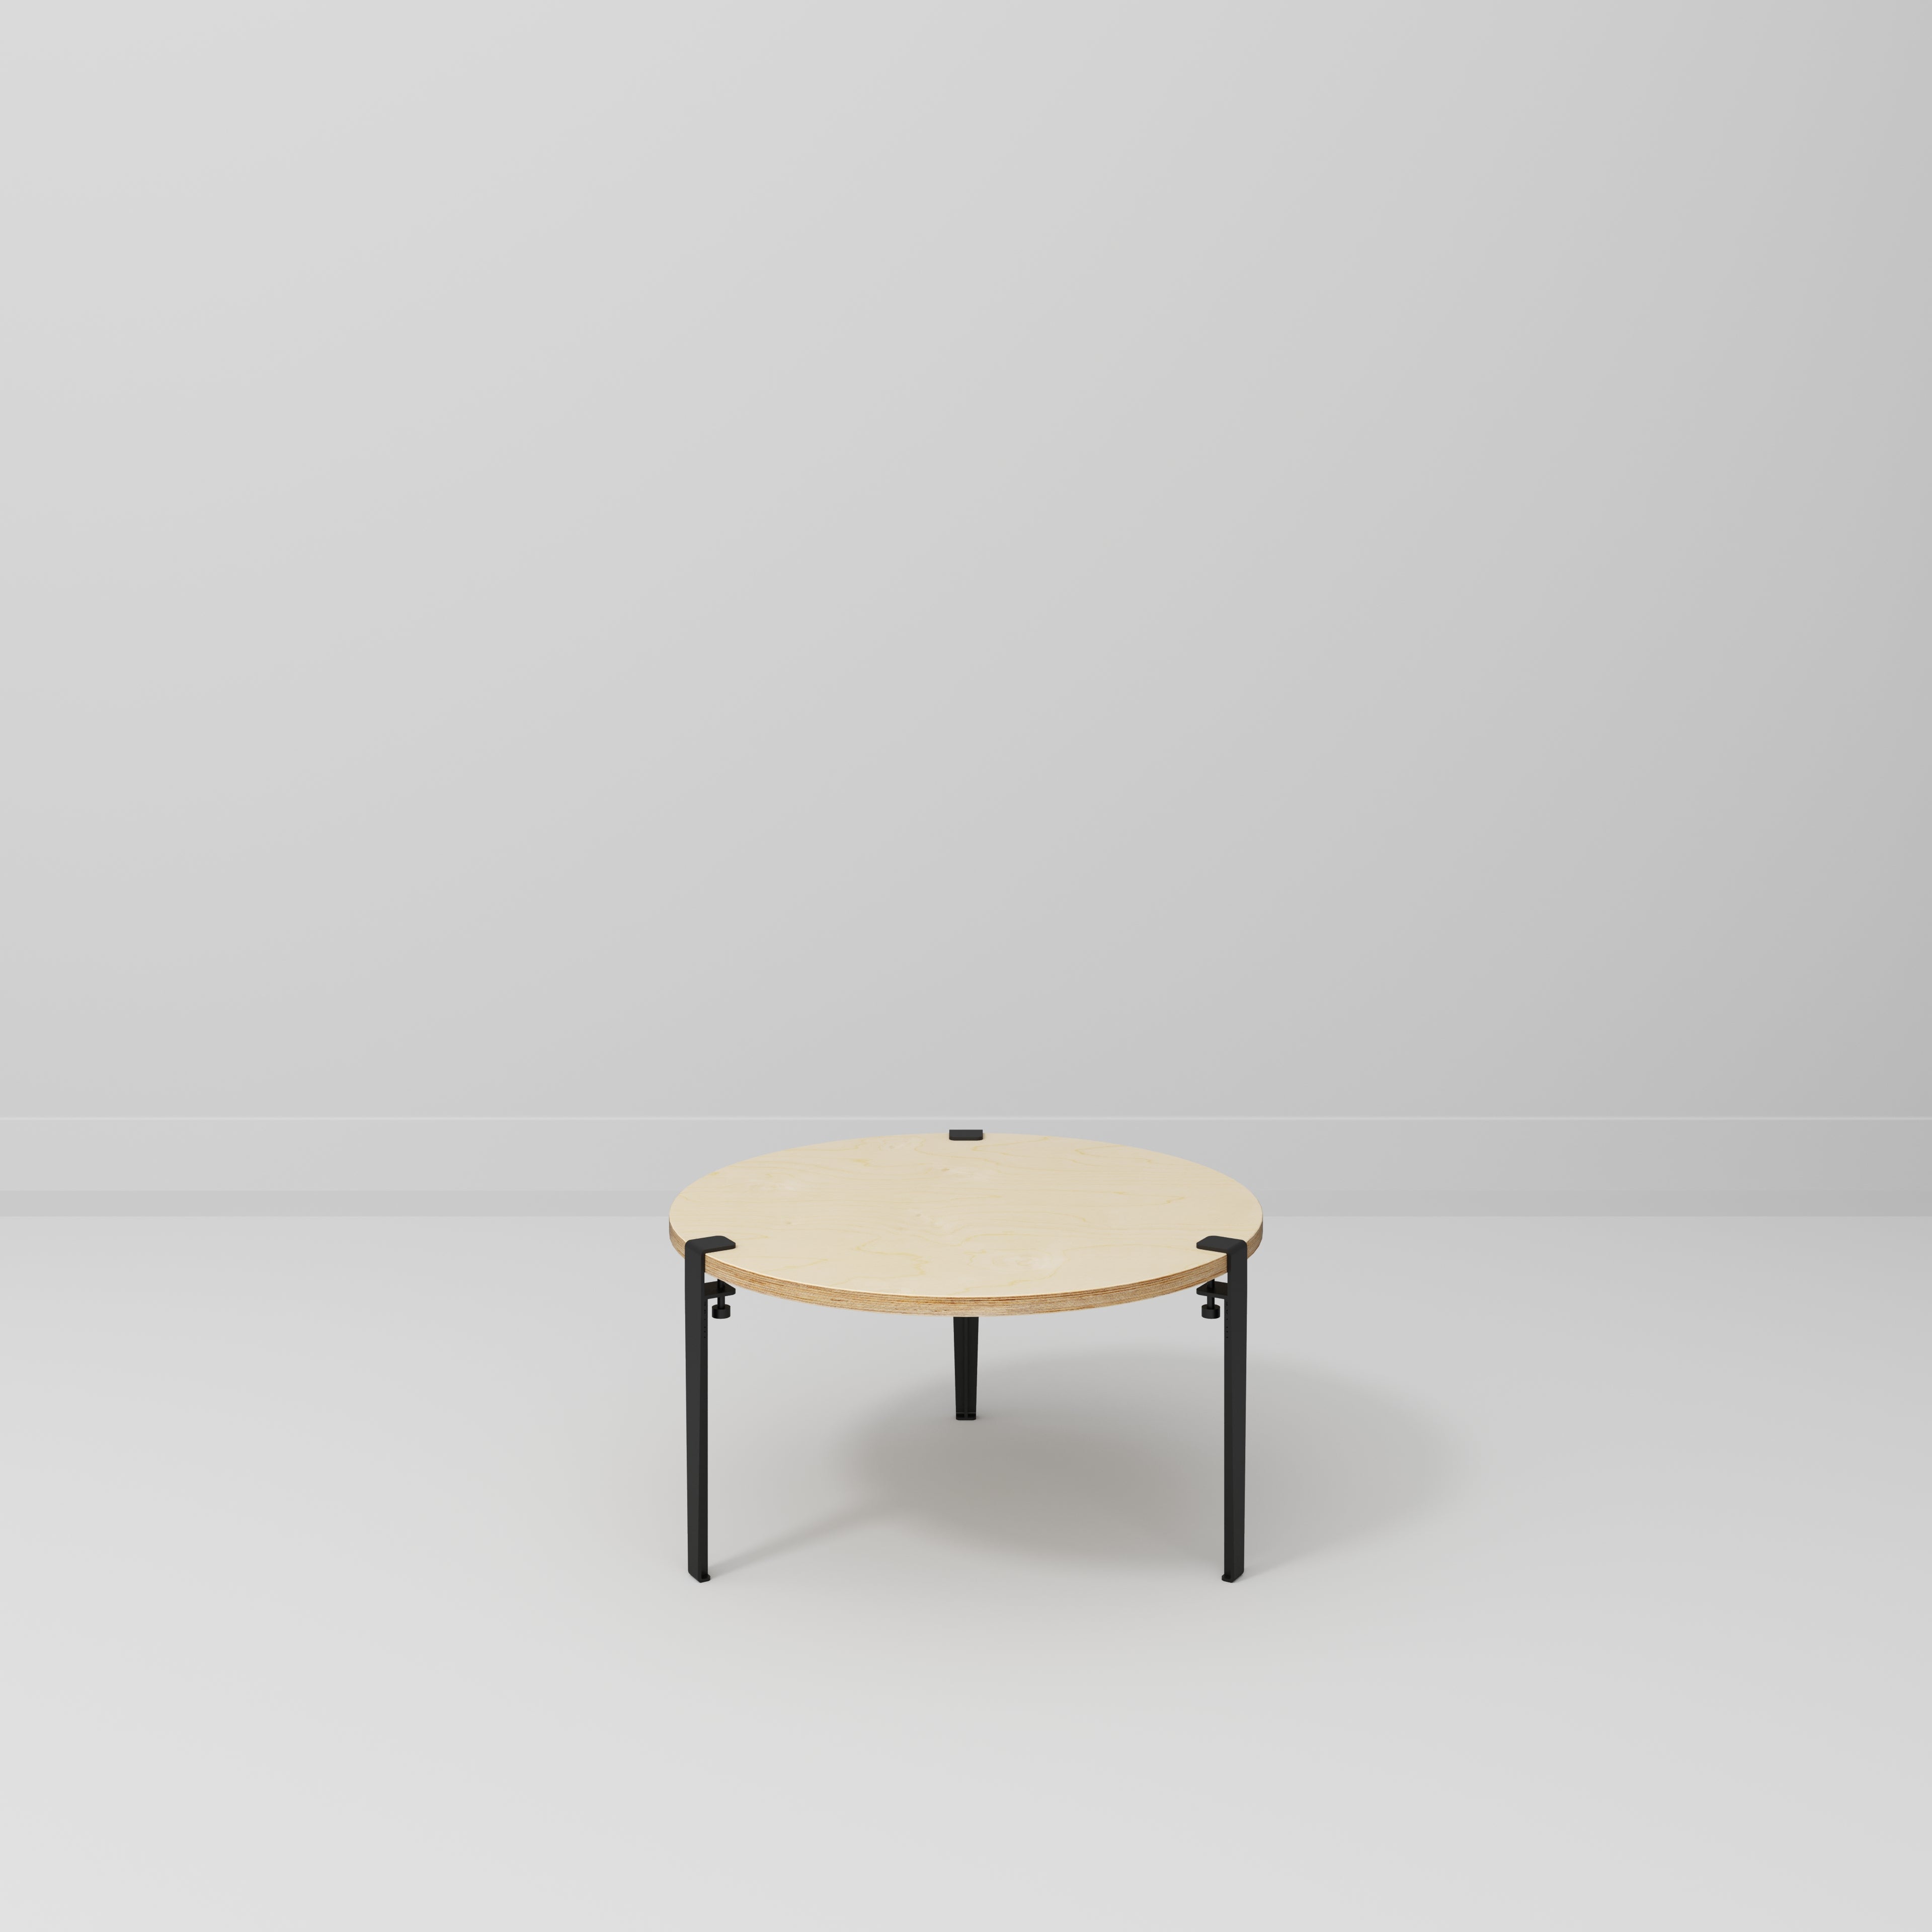 Custom Plywood Round Coffee Table with Tiptoe Legs